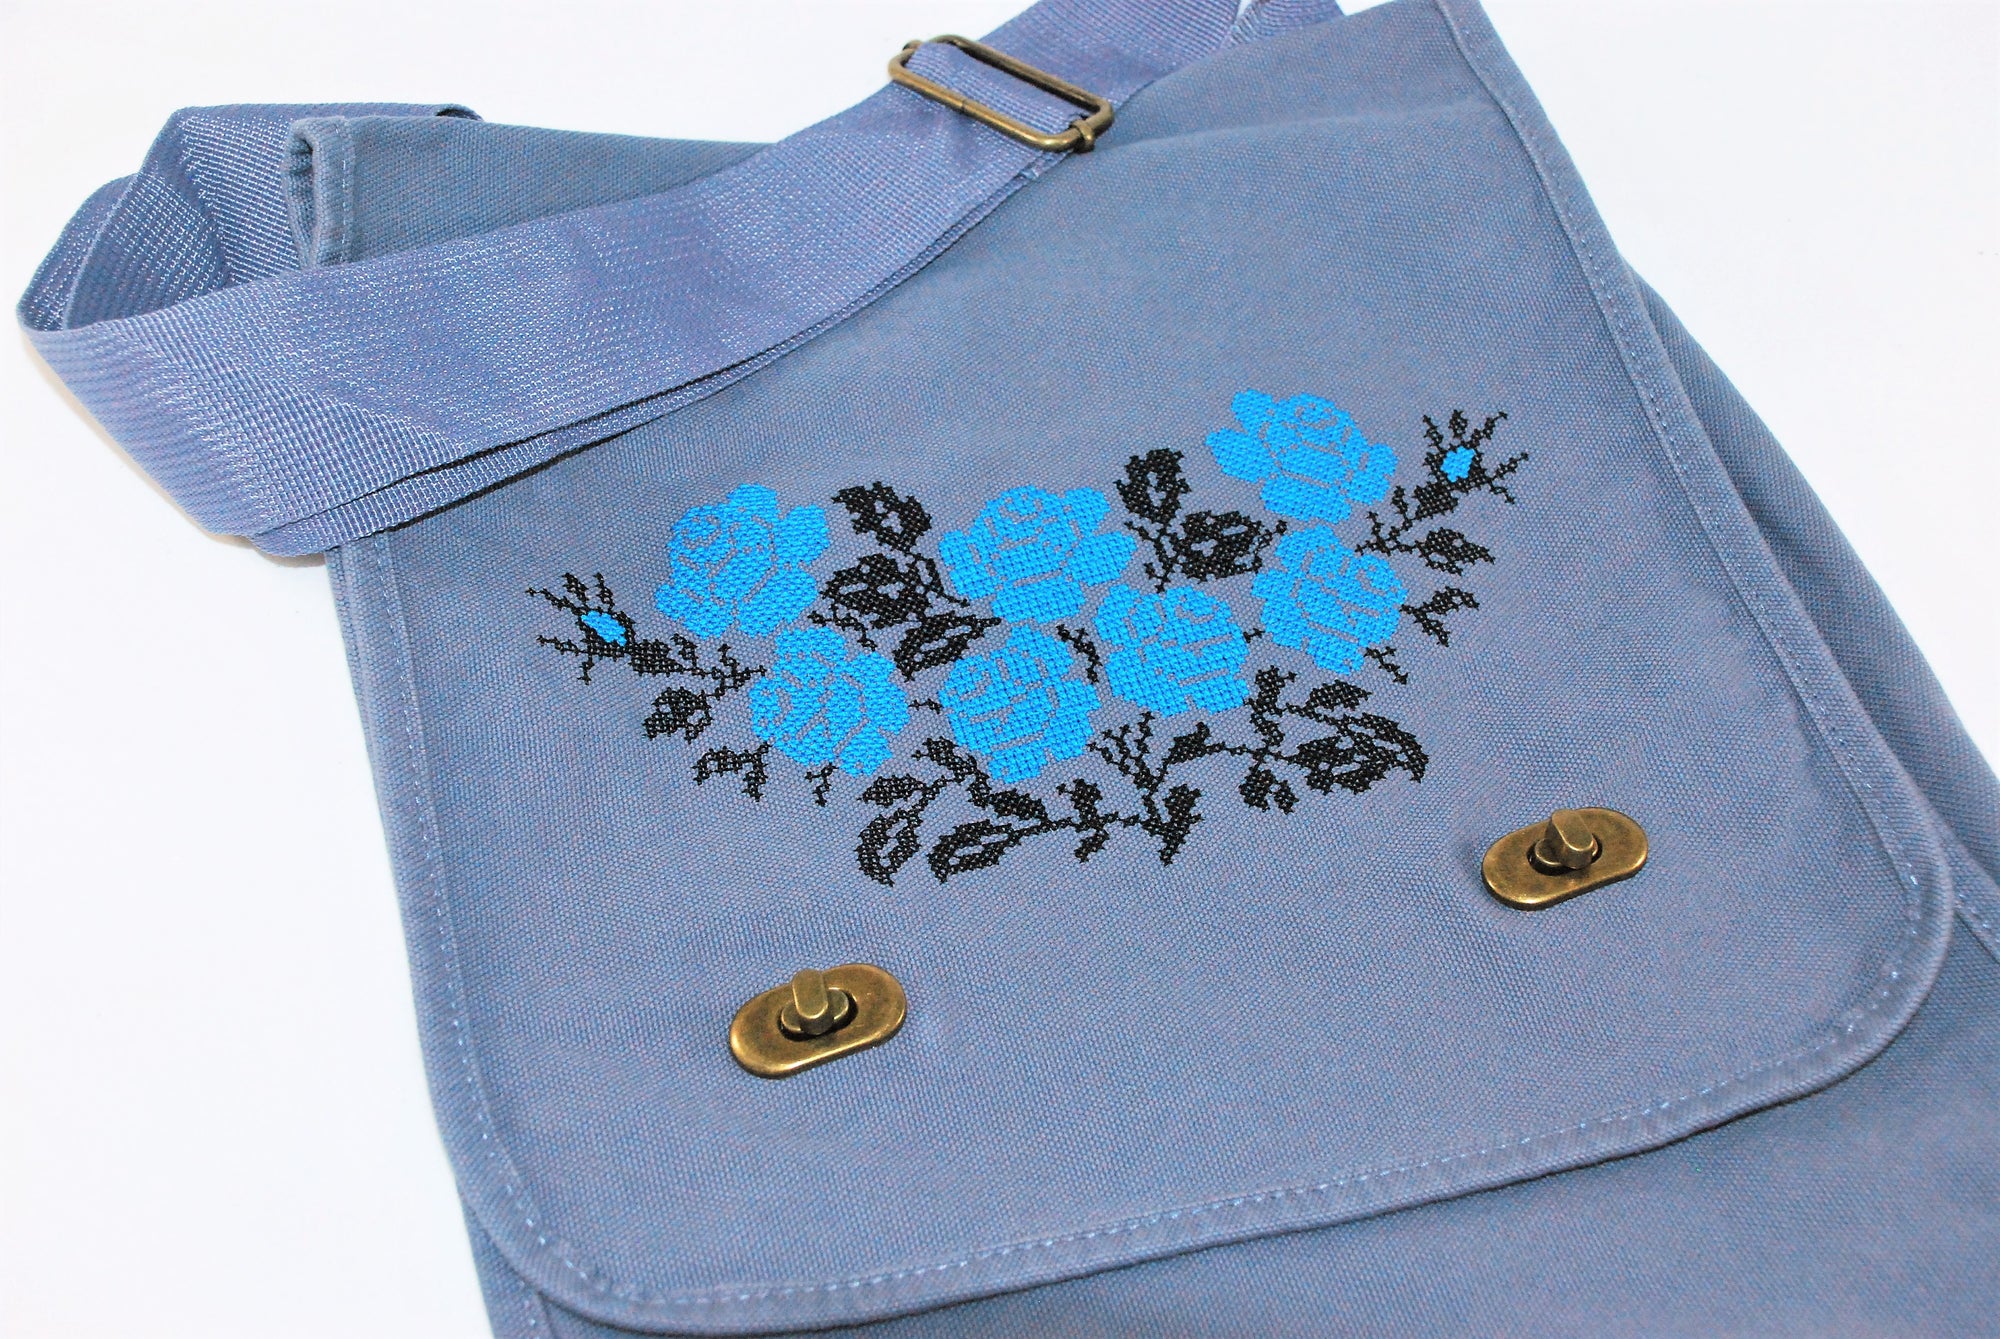 Vintage cotton canvas embroidered bag